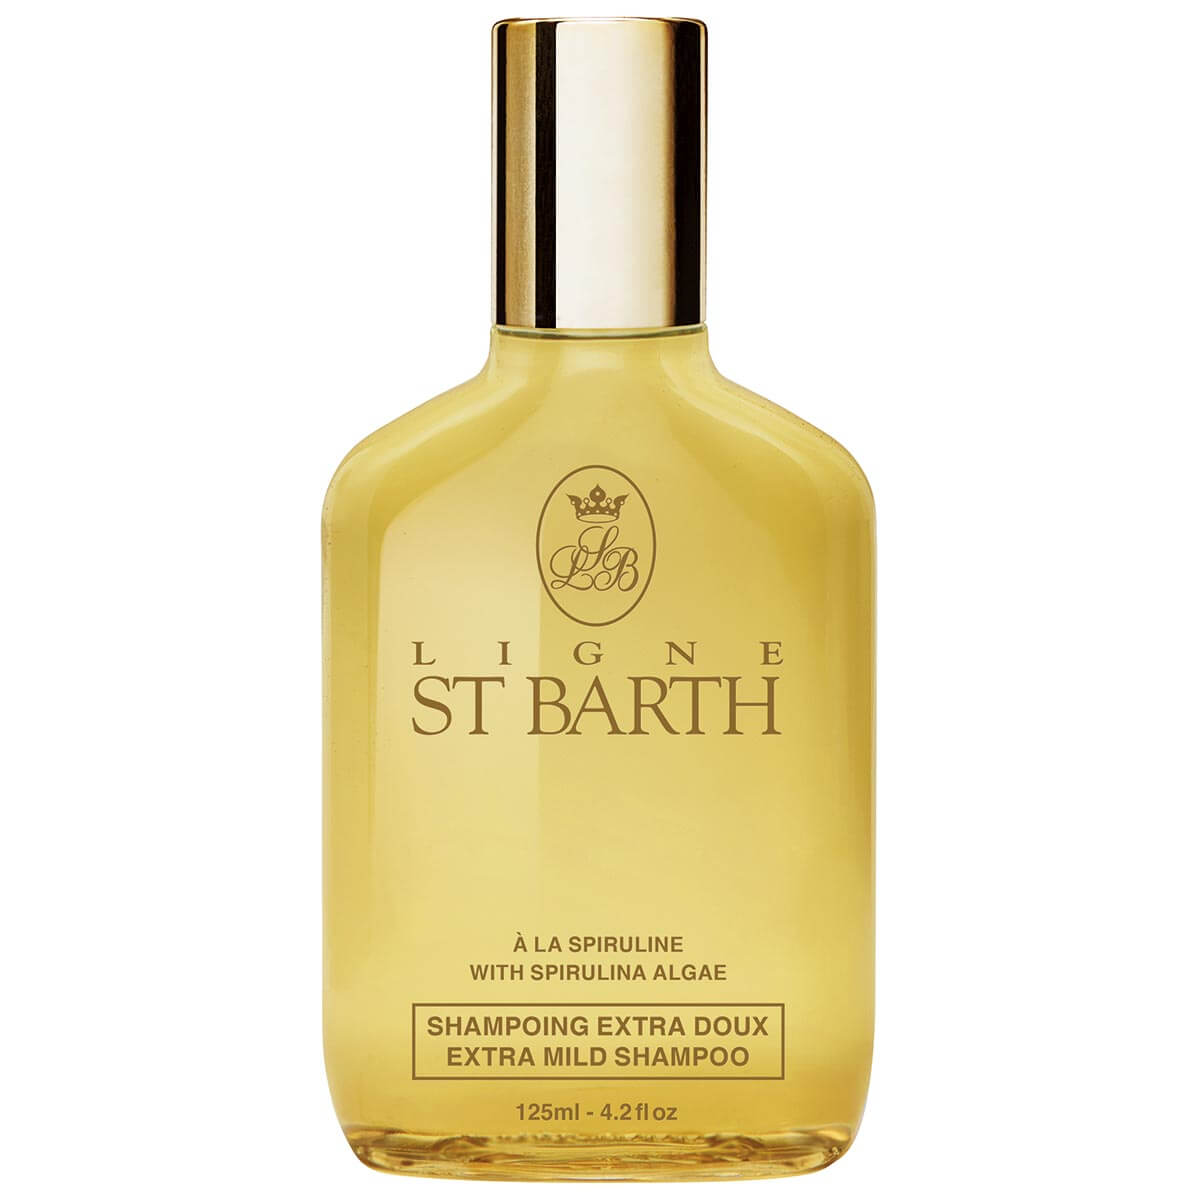 Ligne St Barth Extra Mild Shampoo with Spirulina Algea 125 ml - интернет-магазин профессиональной косметики Spadream, изображение 36733